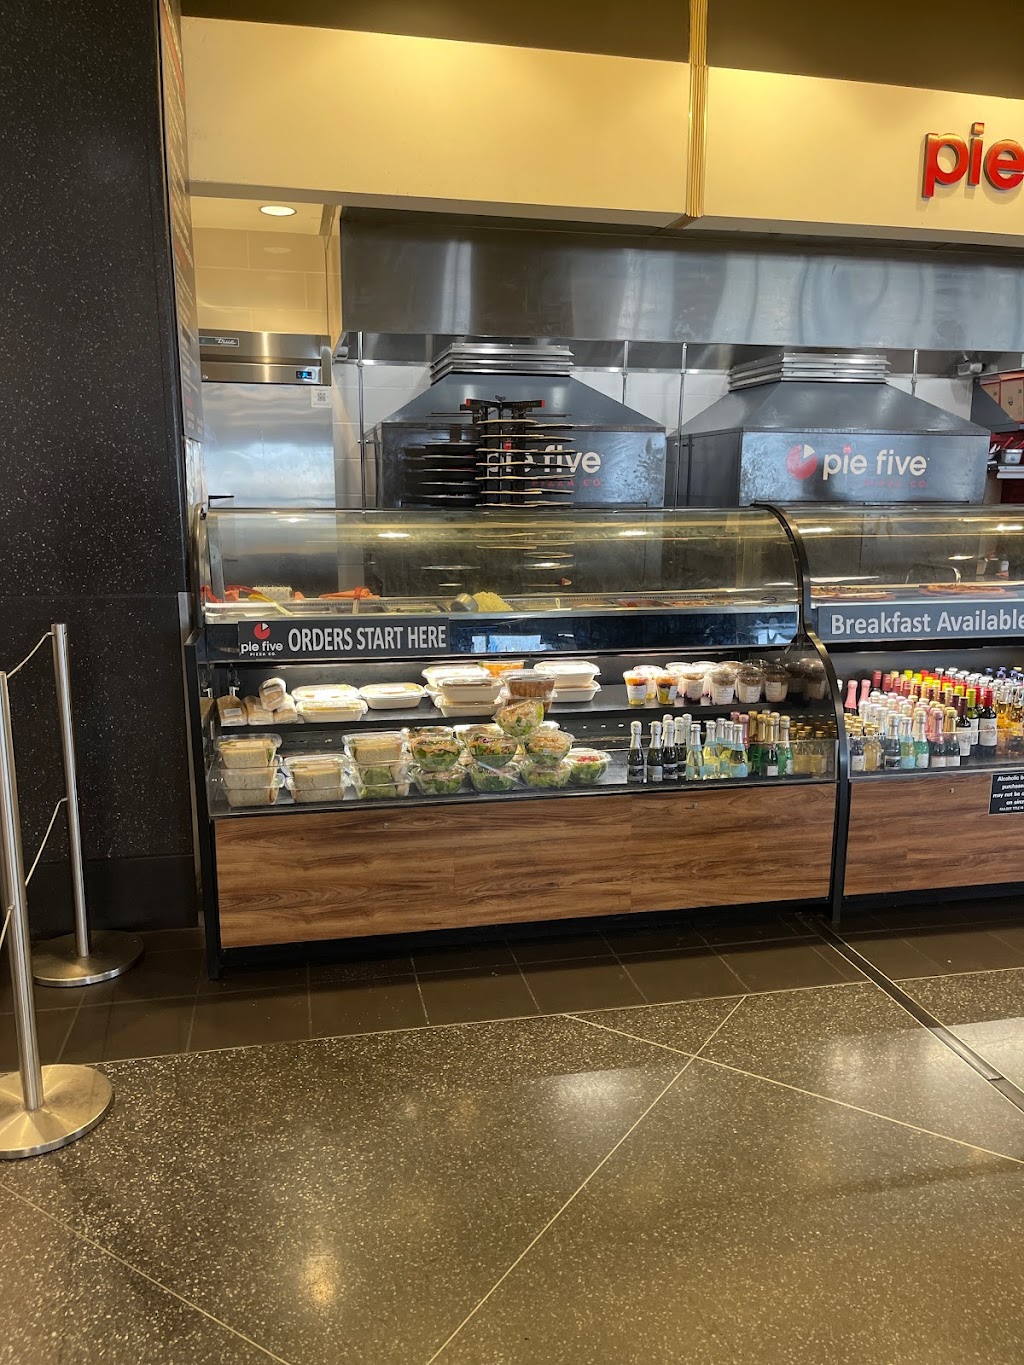 Pie Five Pizza | Terminal 3, Airport Access Rd, San Francisco, CA 94128 | Phone: (650) 821-8942